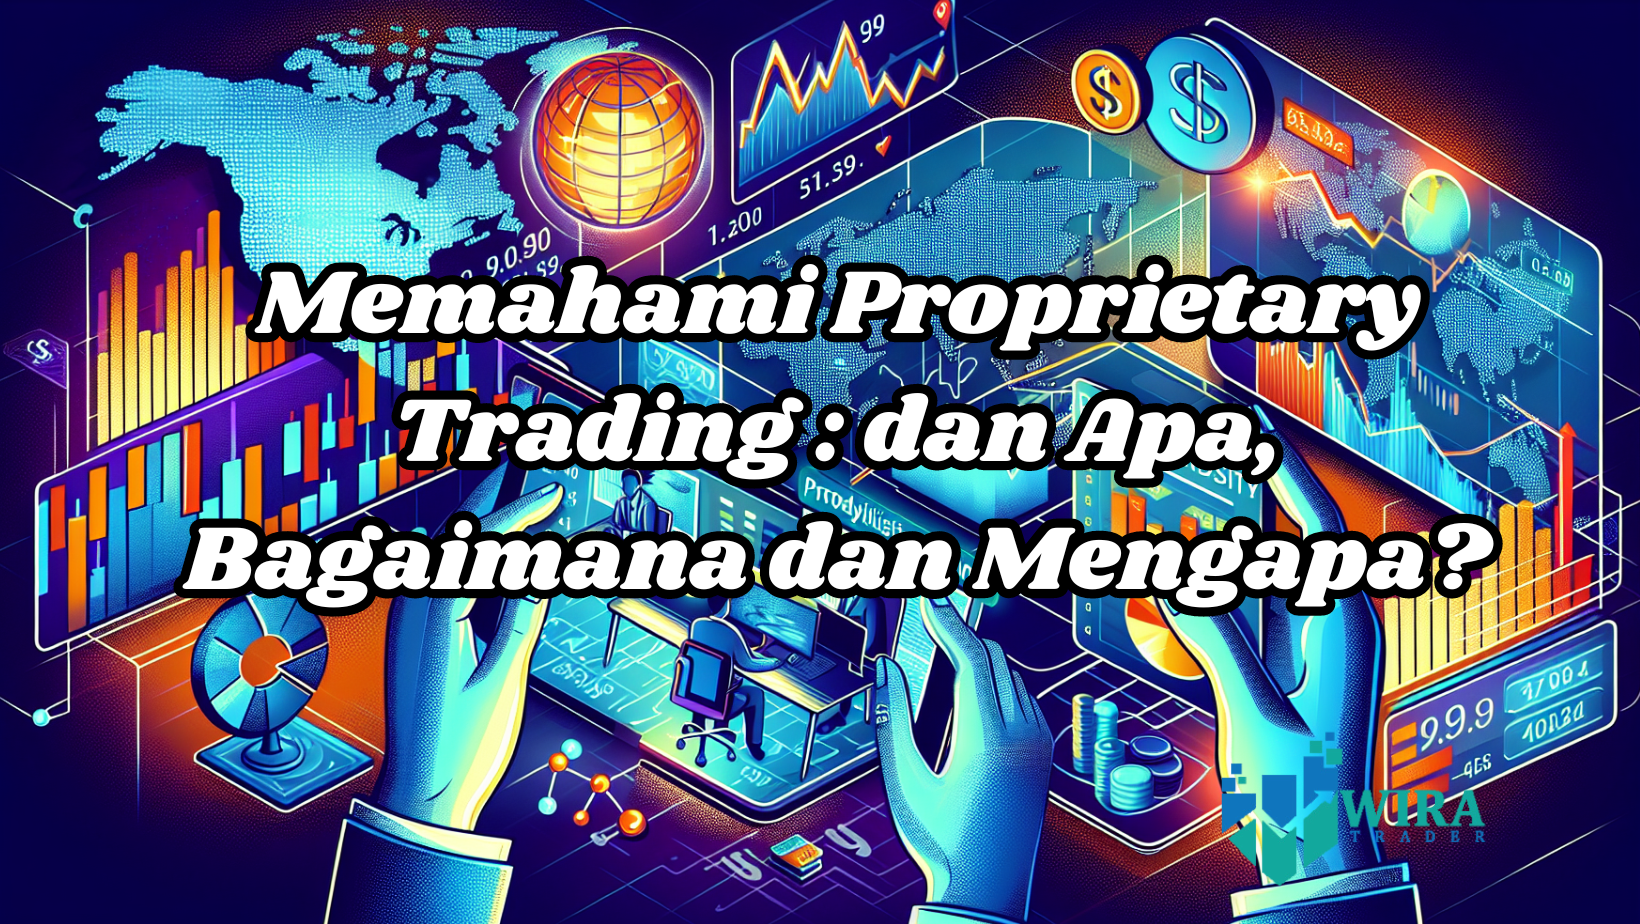 Read more about the article Memahami Proprietary Trading : dan Apa, Bagaimana dan Mengapa?